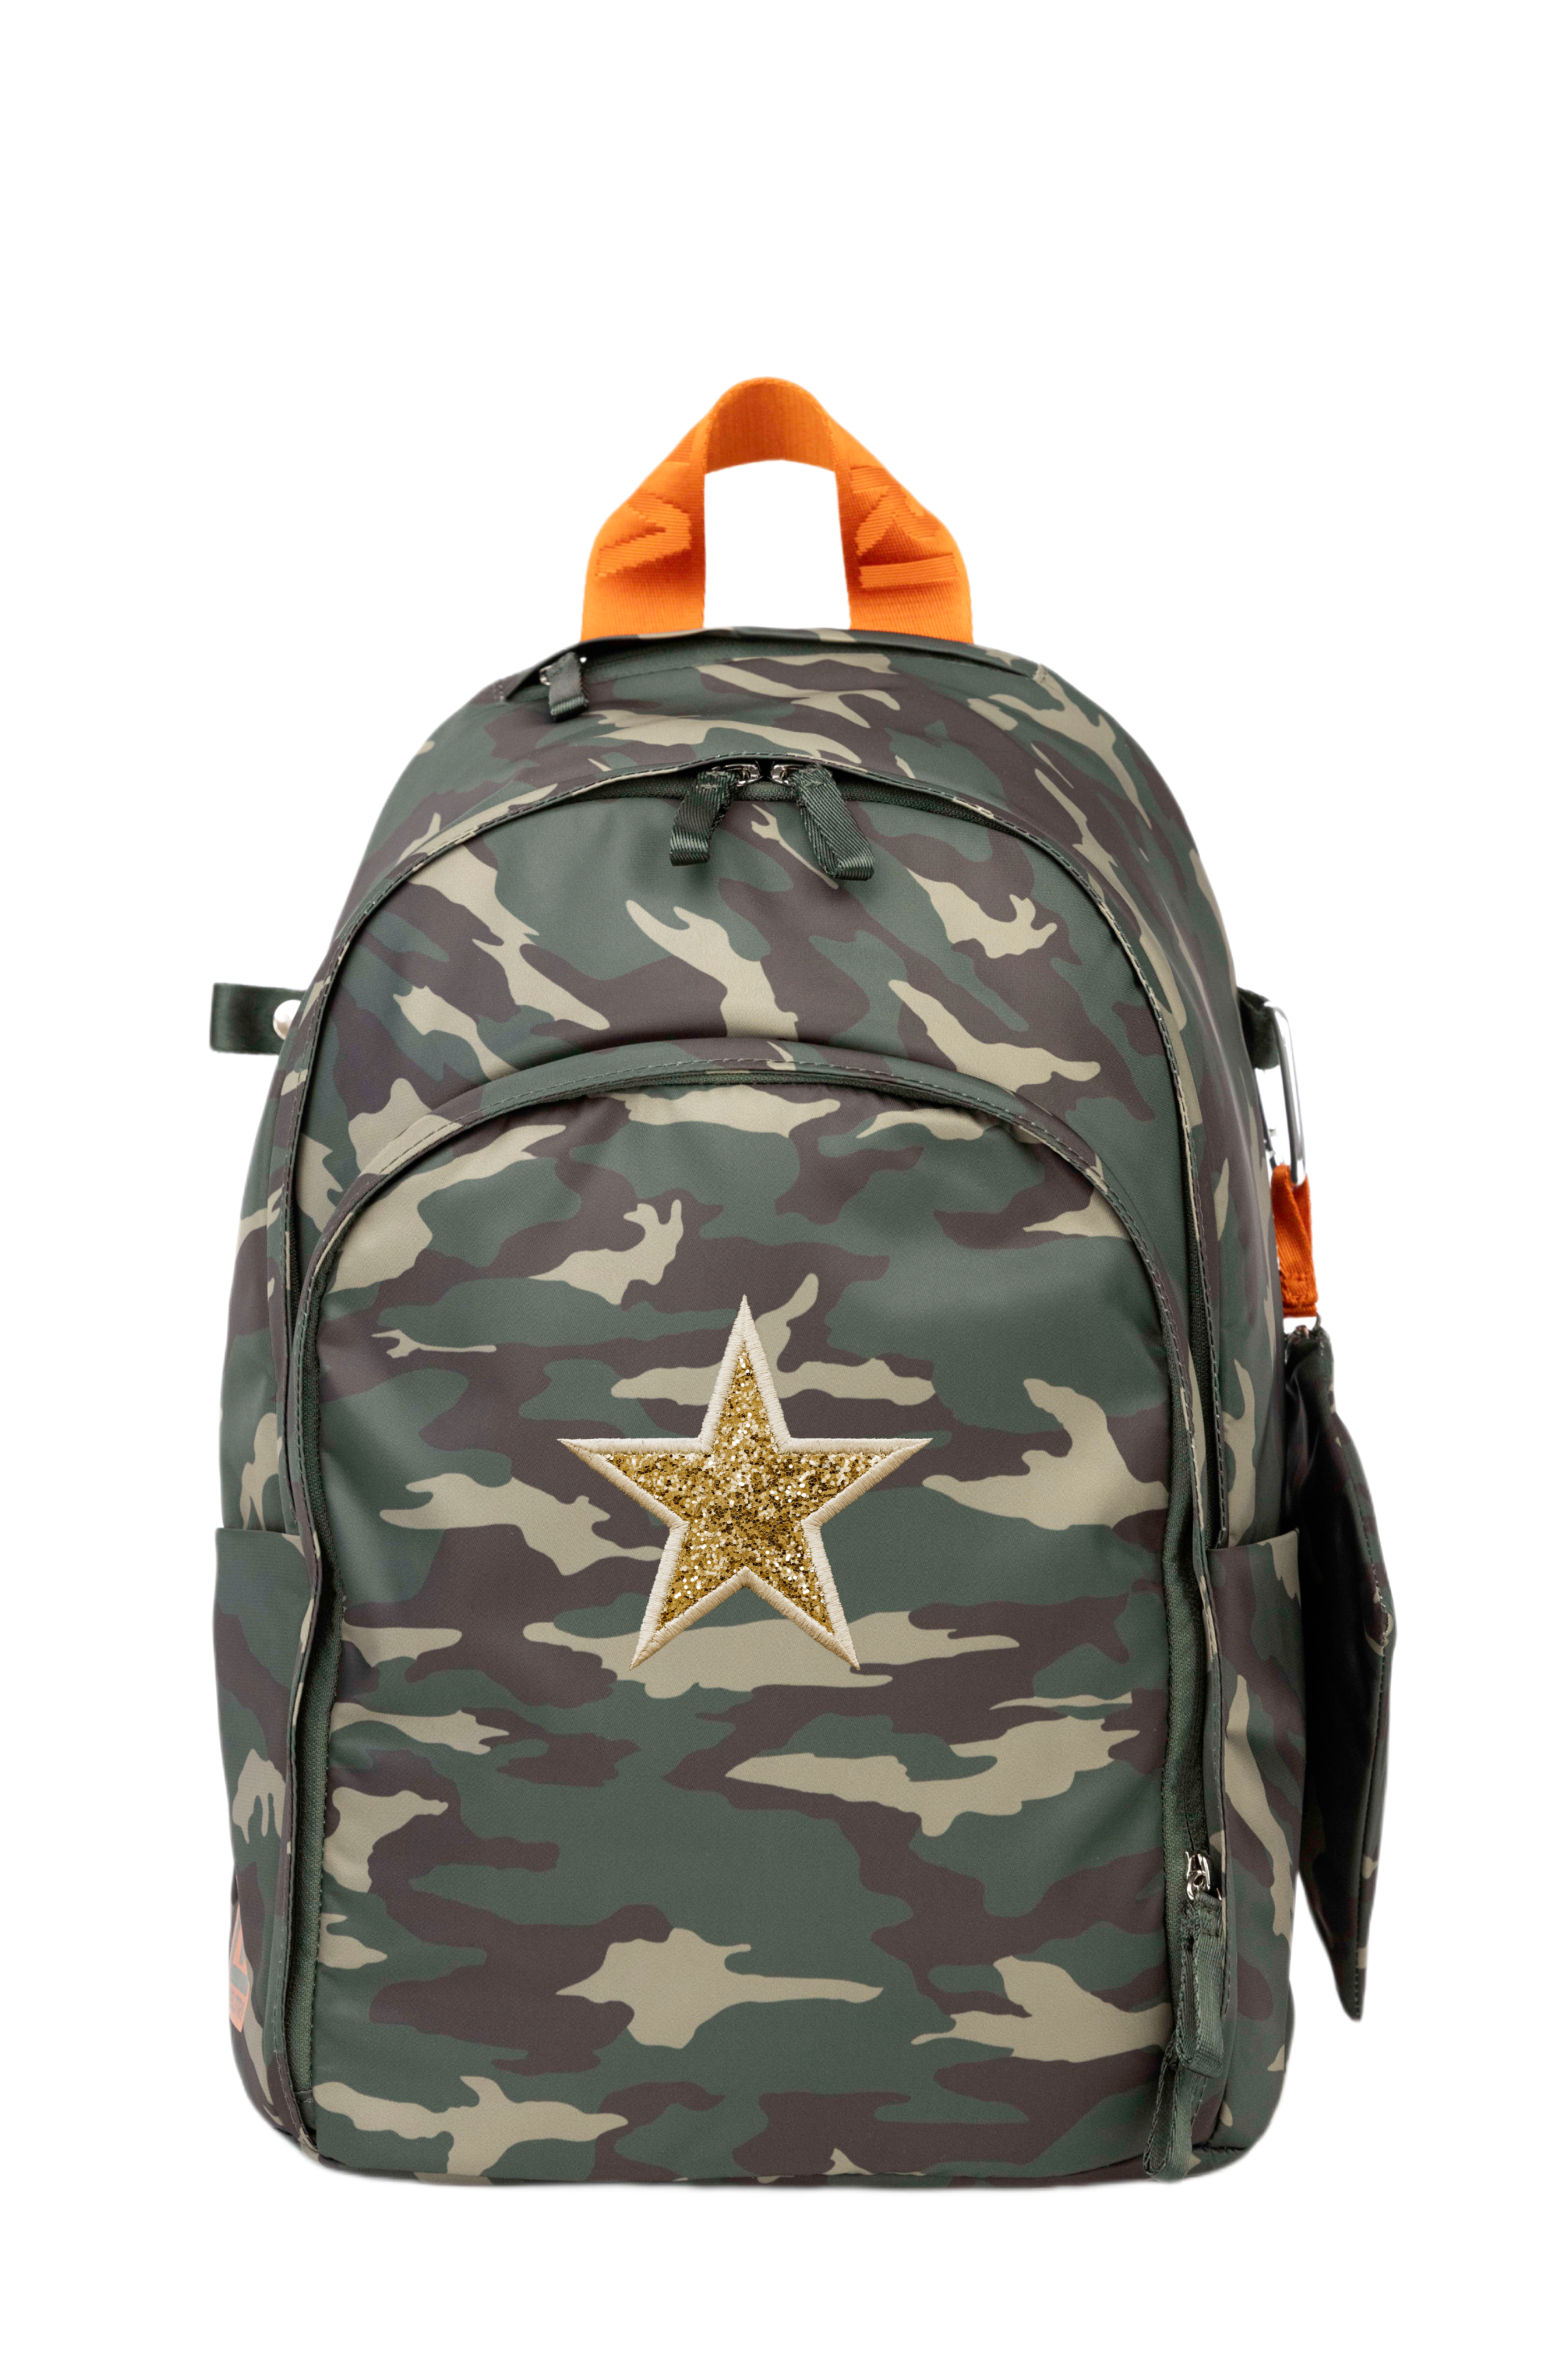 Novelty Backpack "Star"